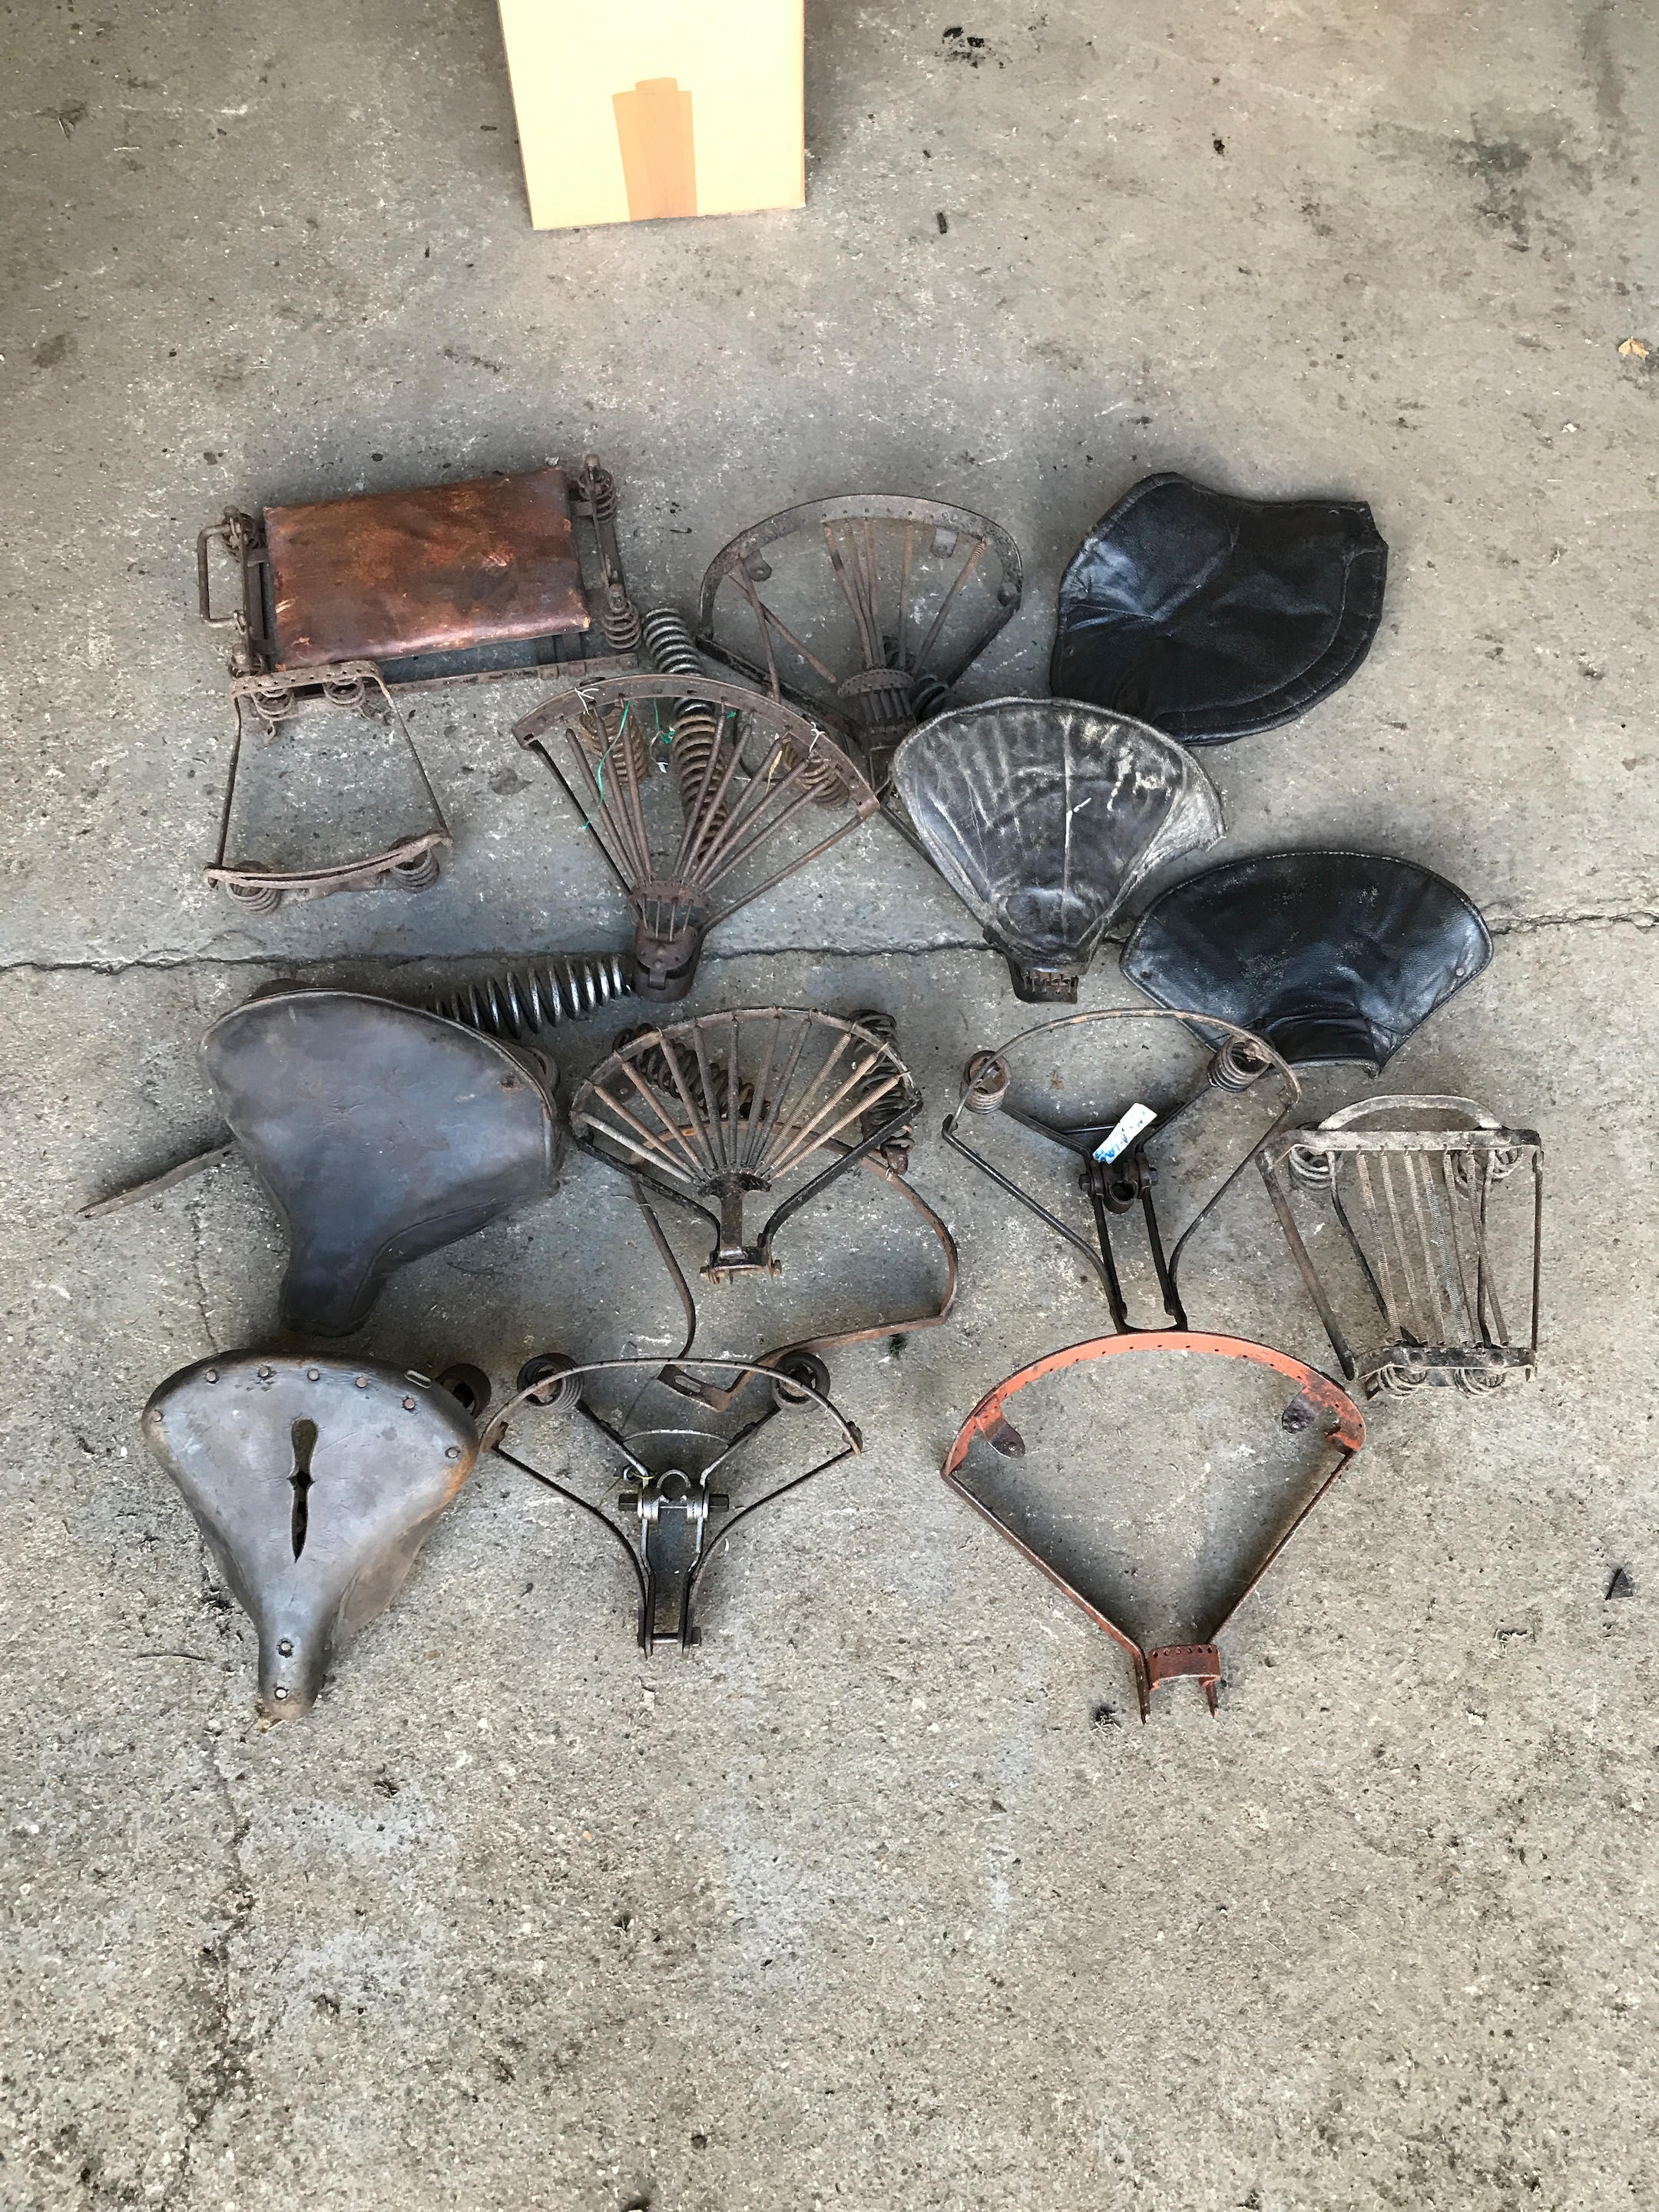 A quantity of saddles, sadle frames and associated parts